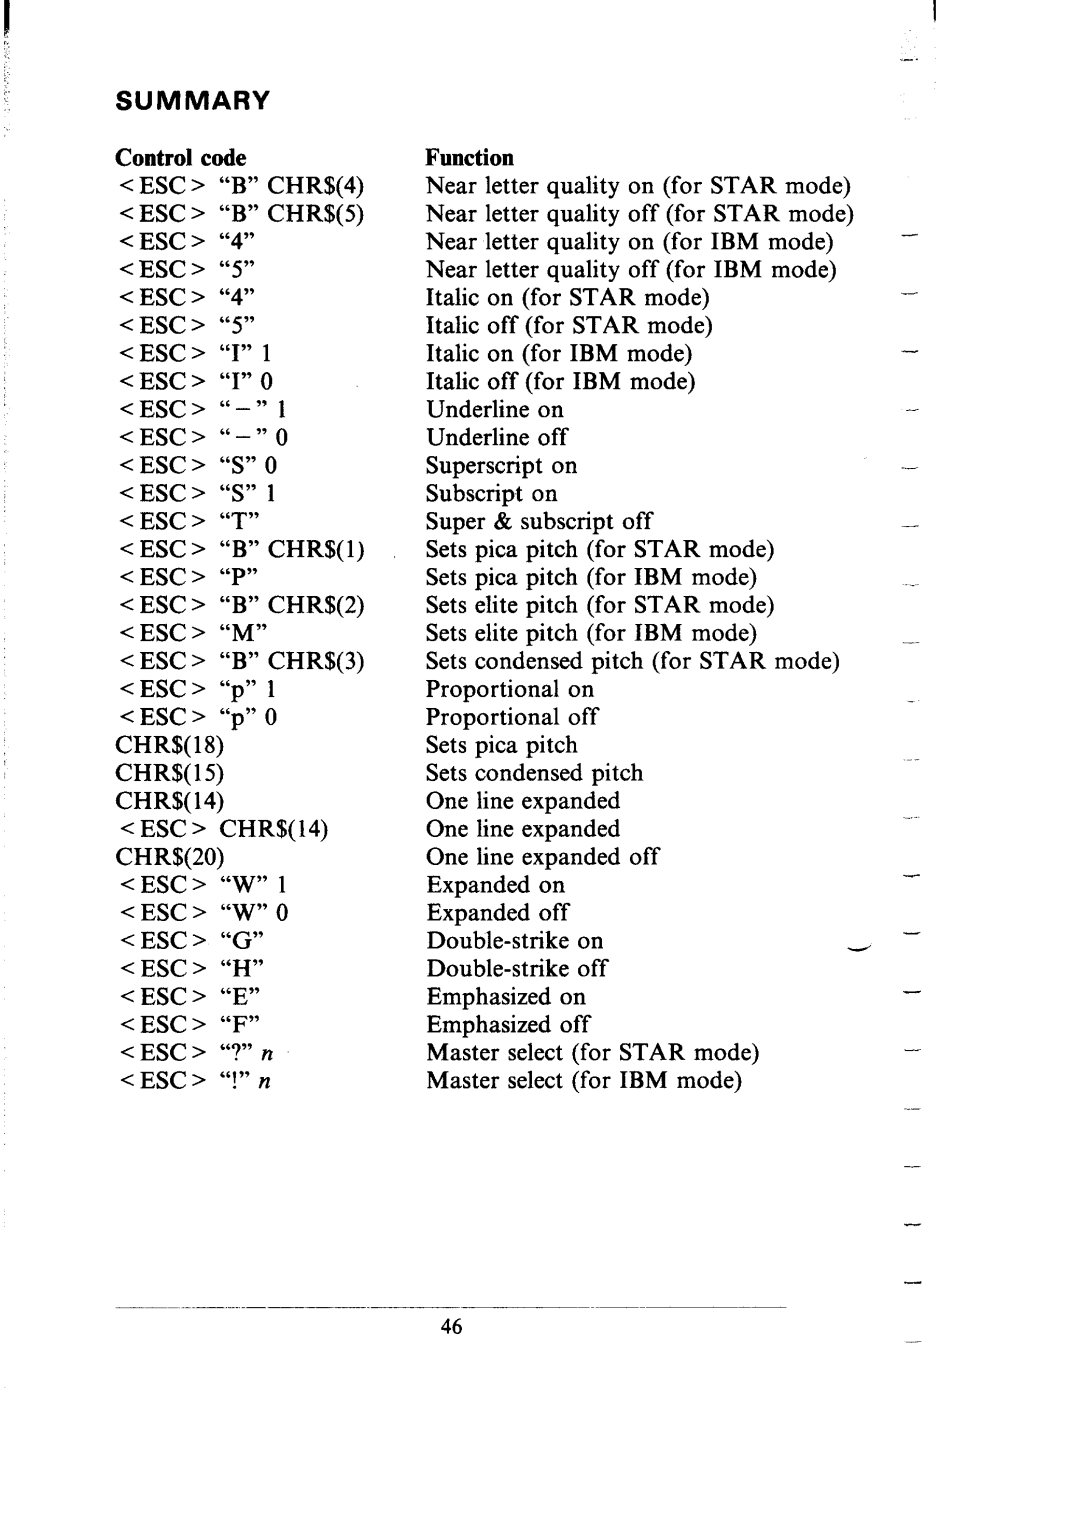 Star Micronics SR-10/I5 user manual Summary, Control code, Function 